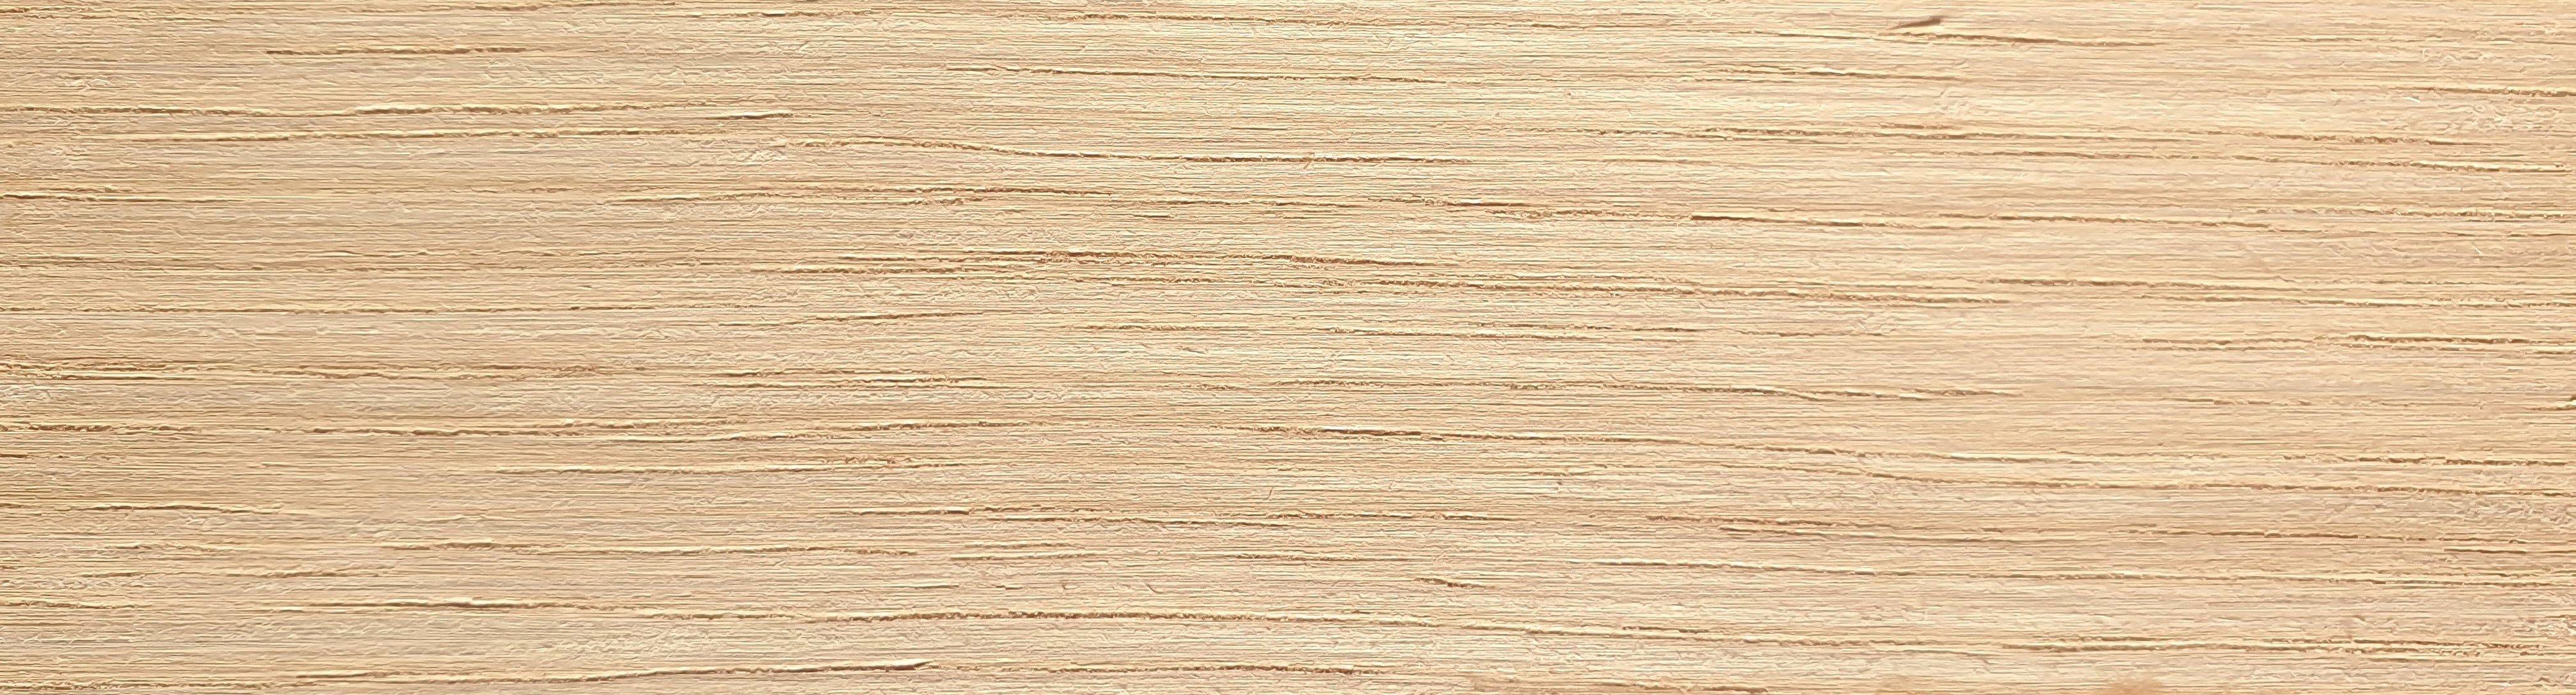 American White Oak Unglued Thick Wood Edging / Lipping 24mm x 2mm